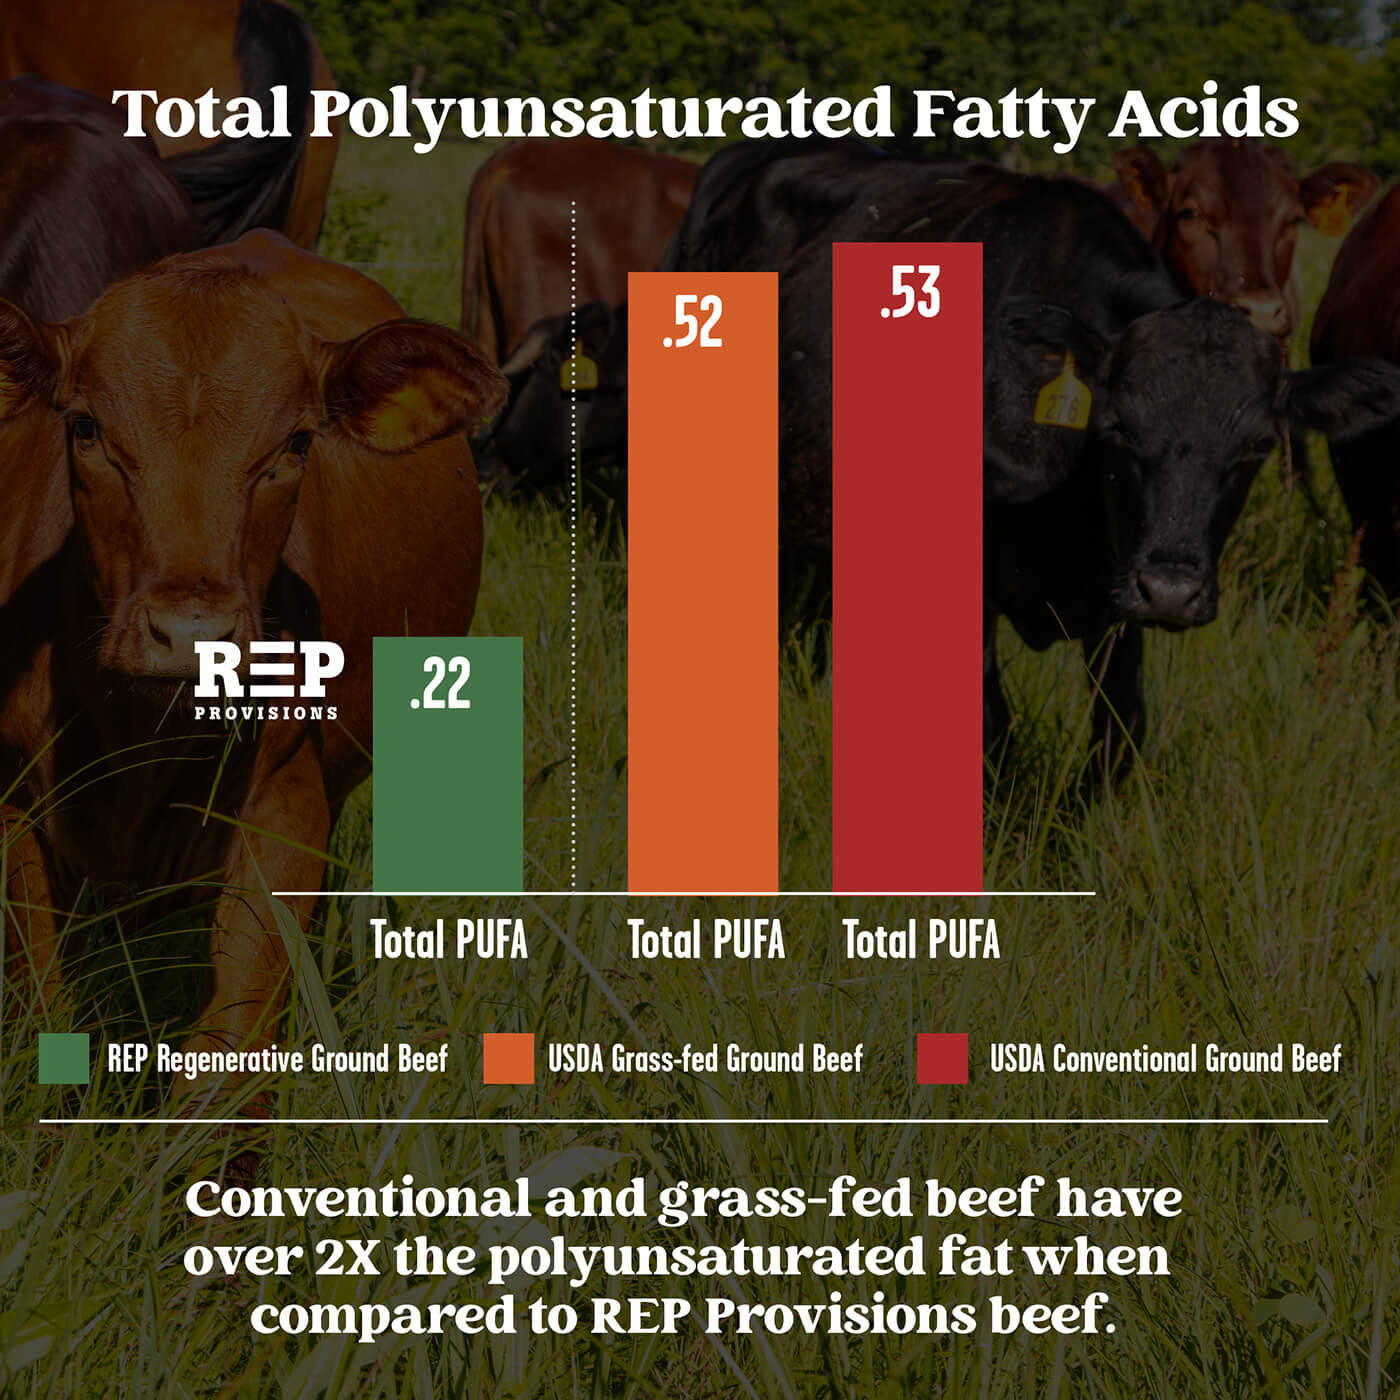 PUFA: Polyunsaturated fatty acids